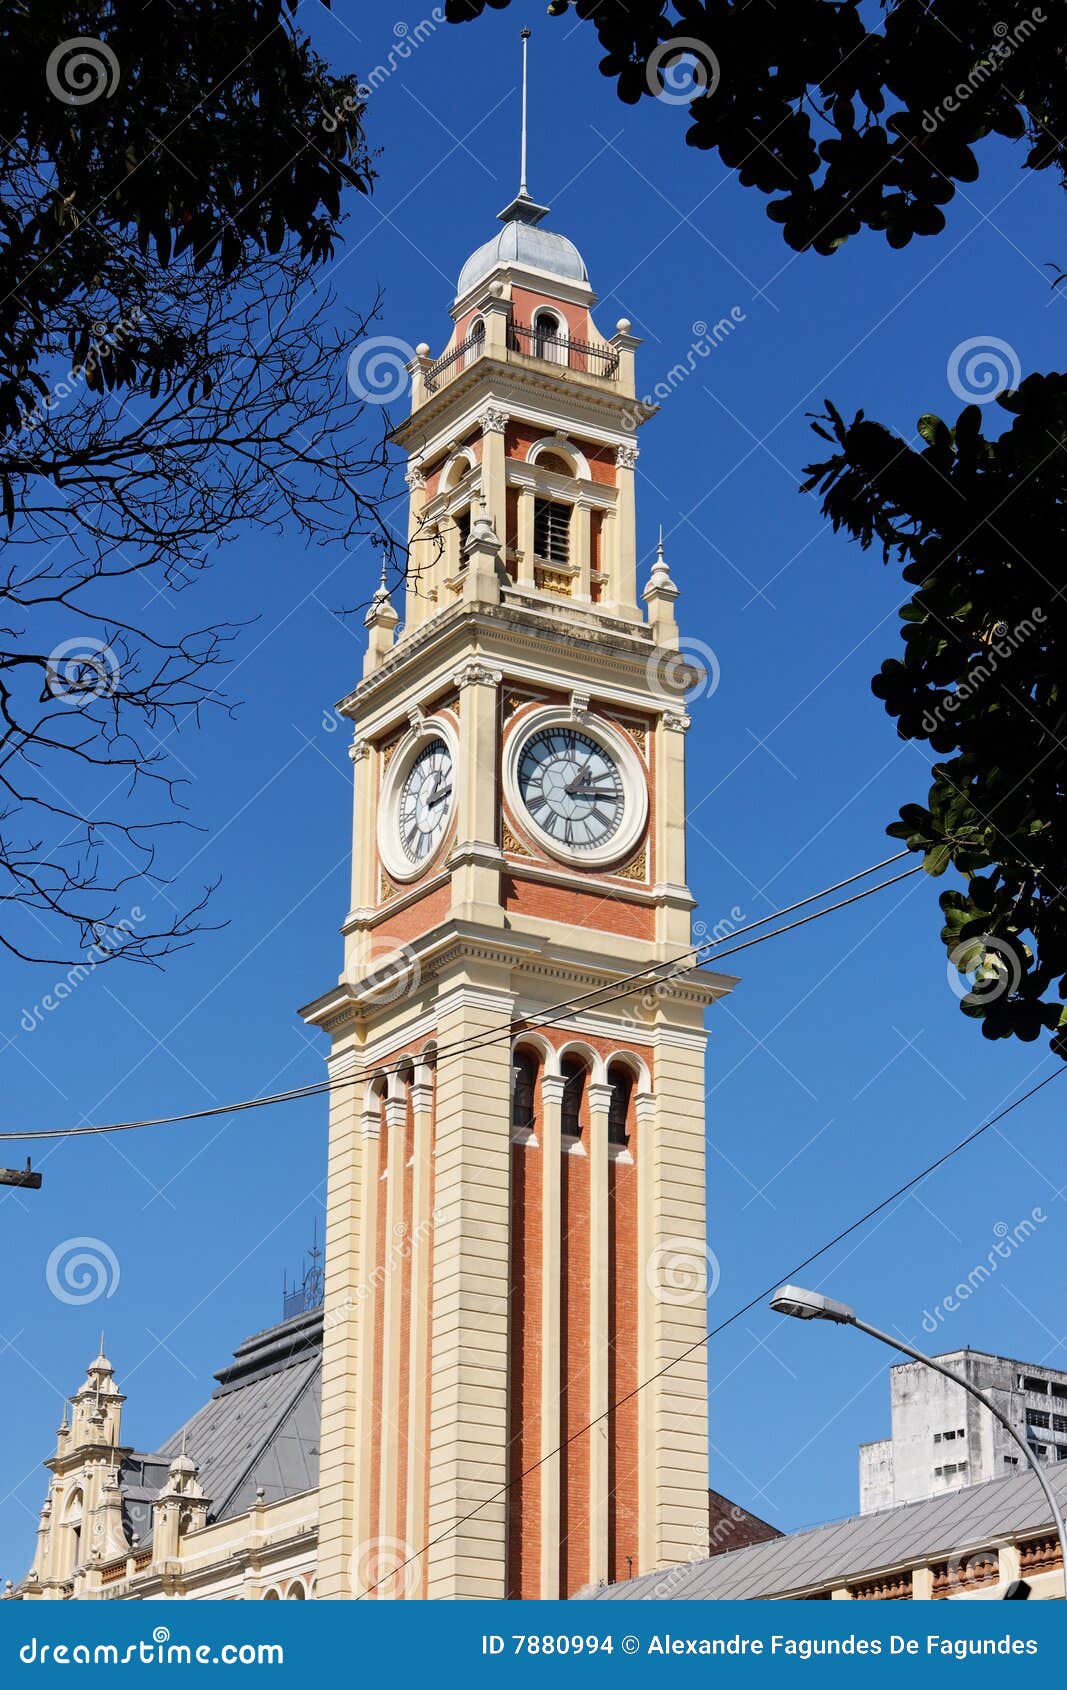 luz train station clock tower sao paulo brazil